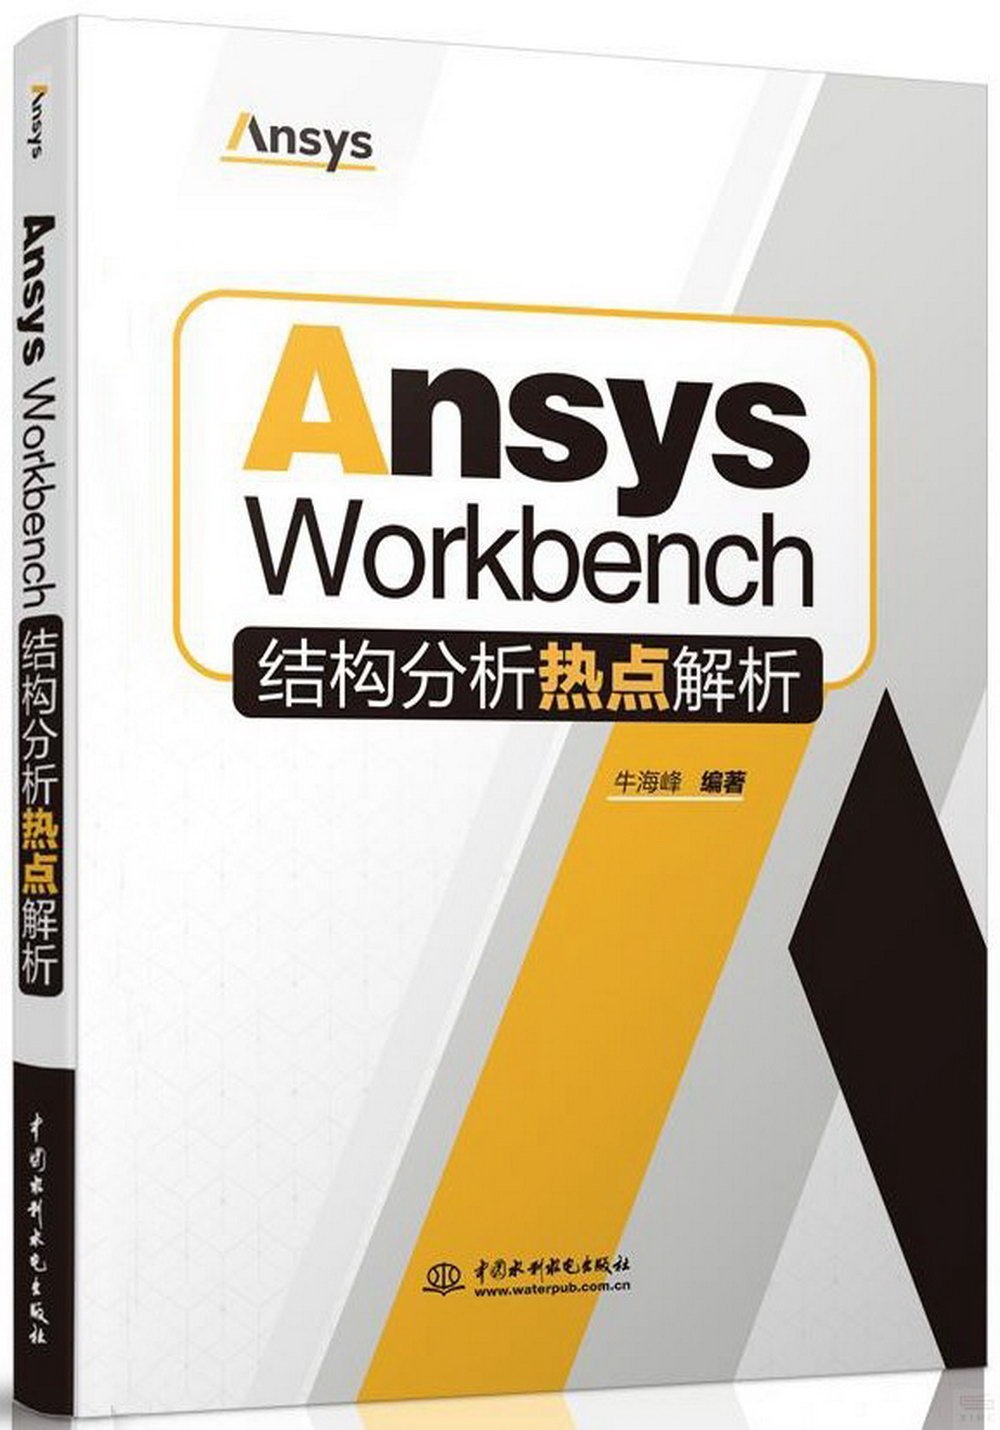 Ansys Workbench結構分析熱點解析